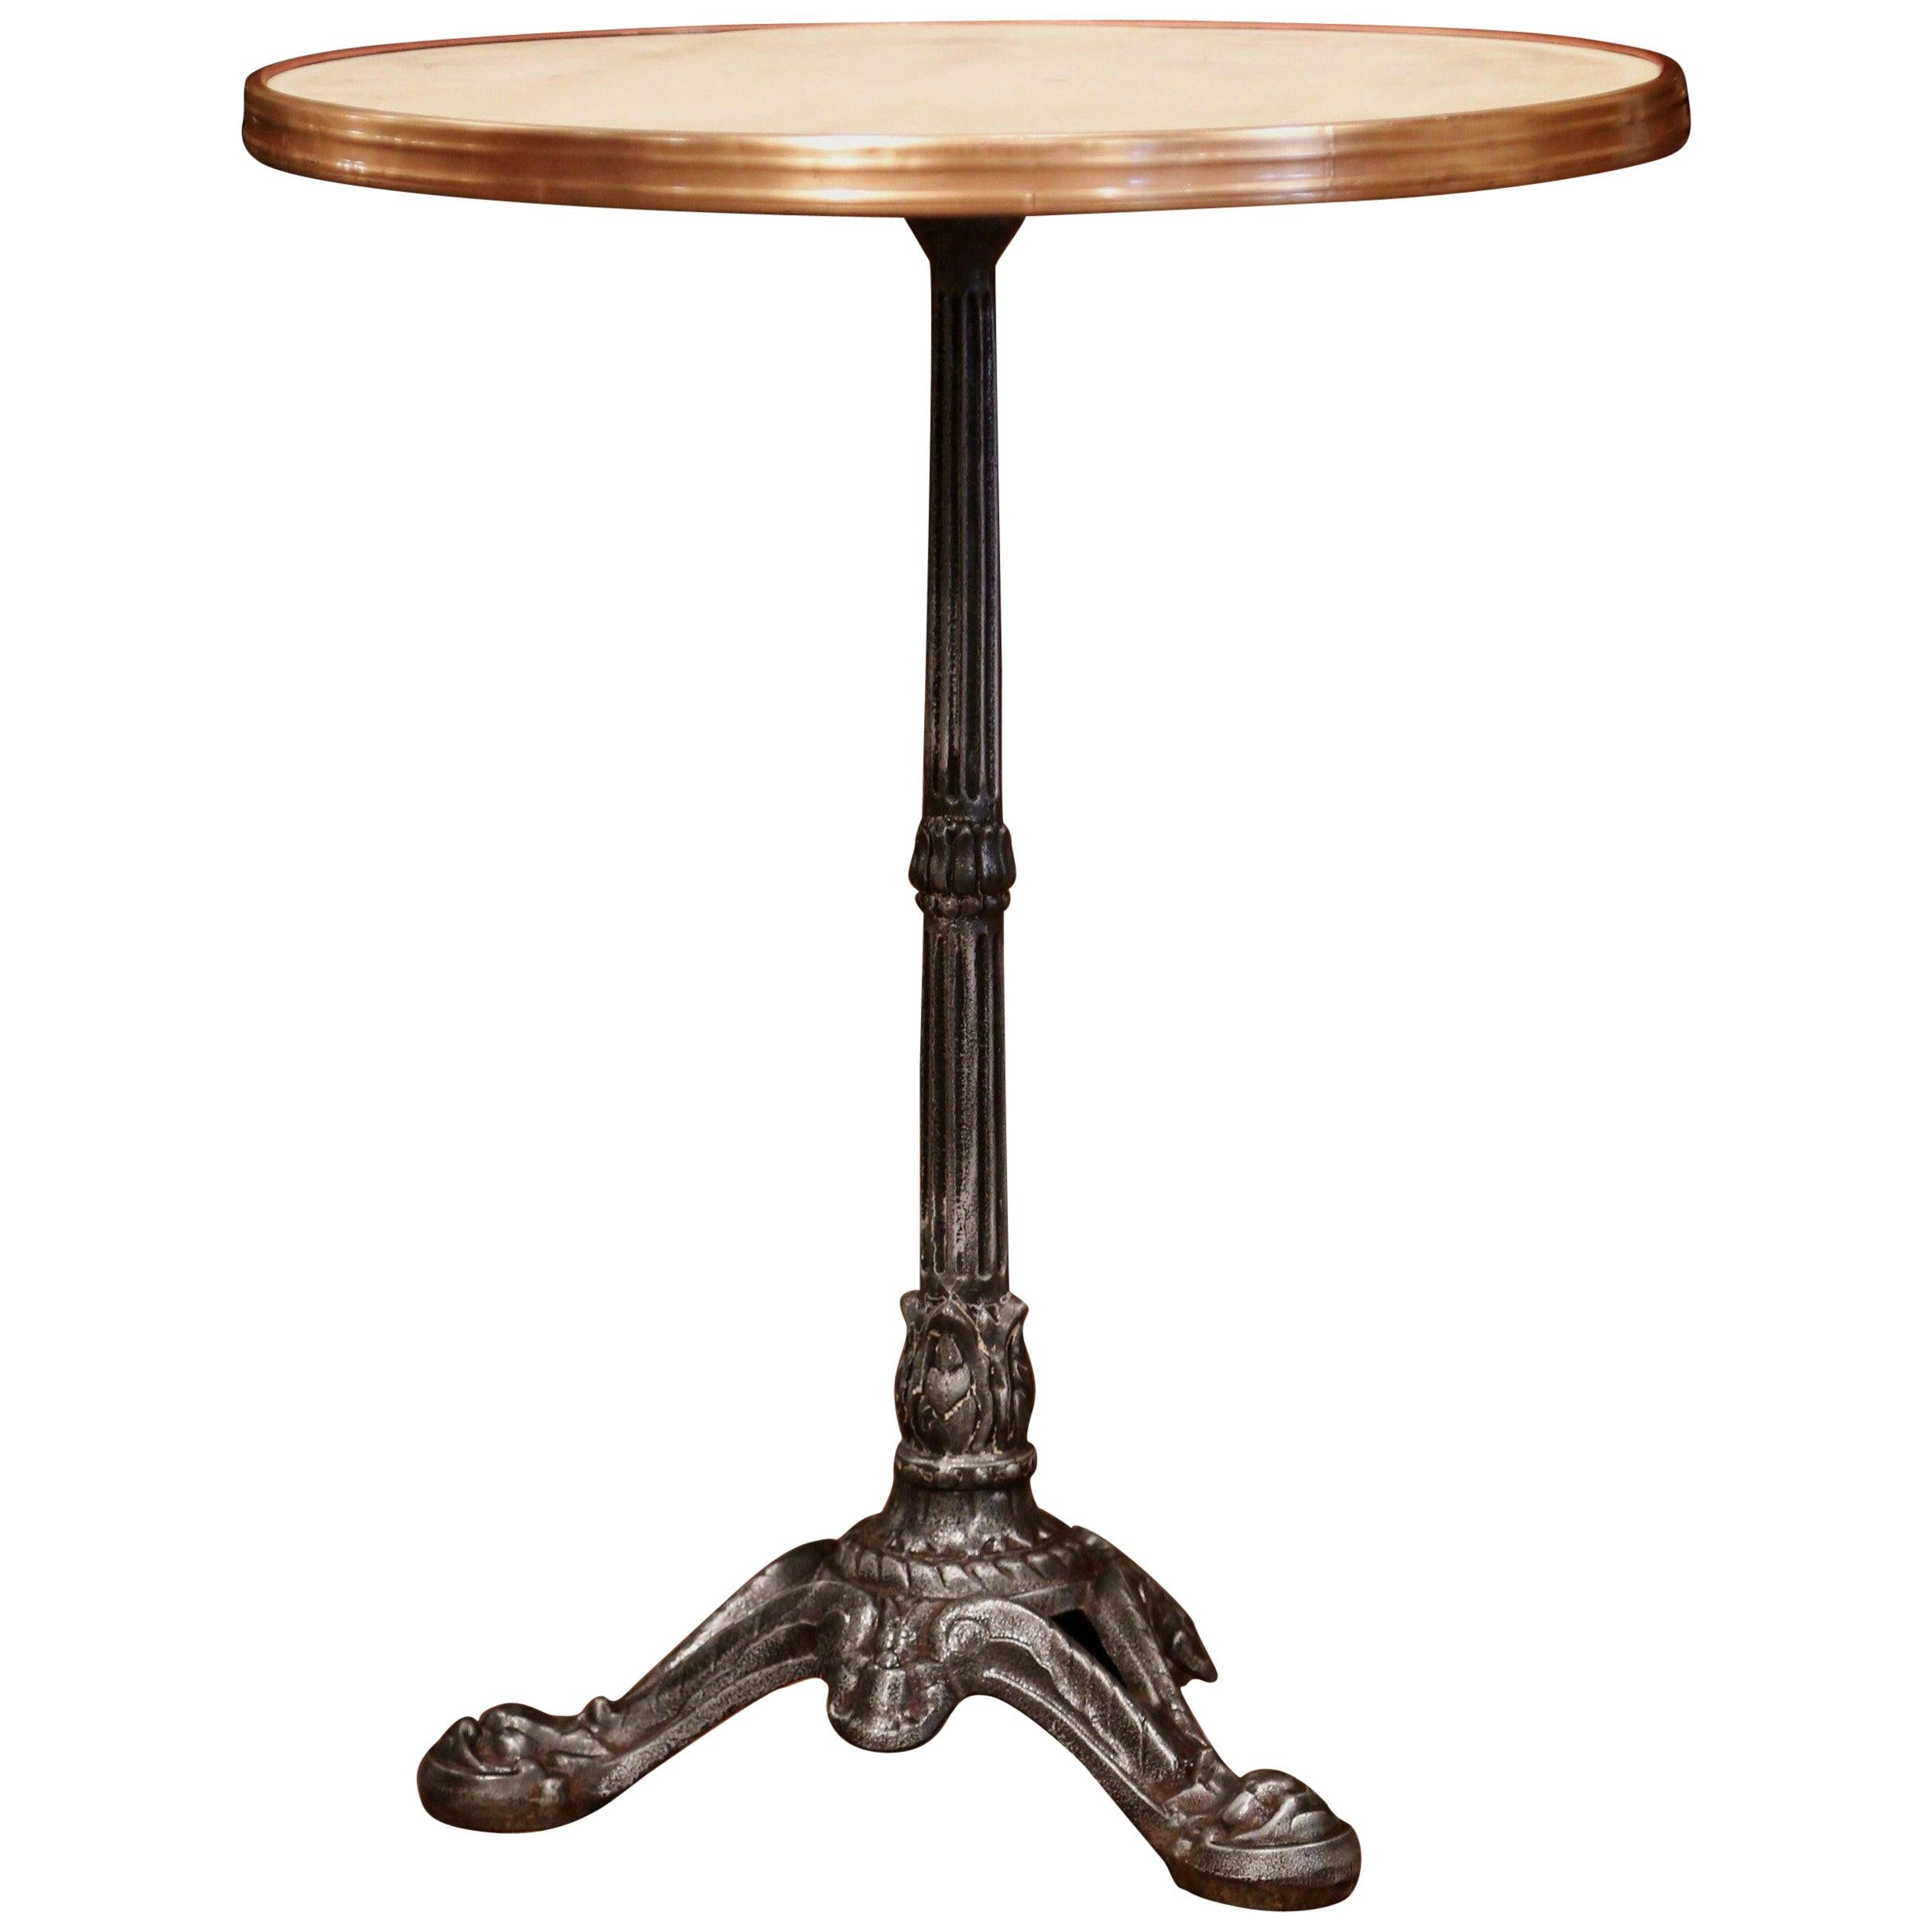 19th Century Napoleon III French Iron and Wood Gueridon Pedestal Table